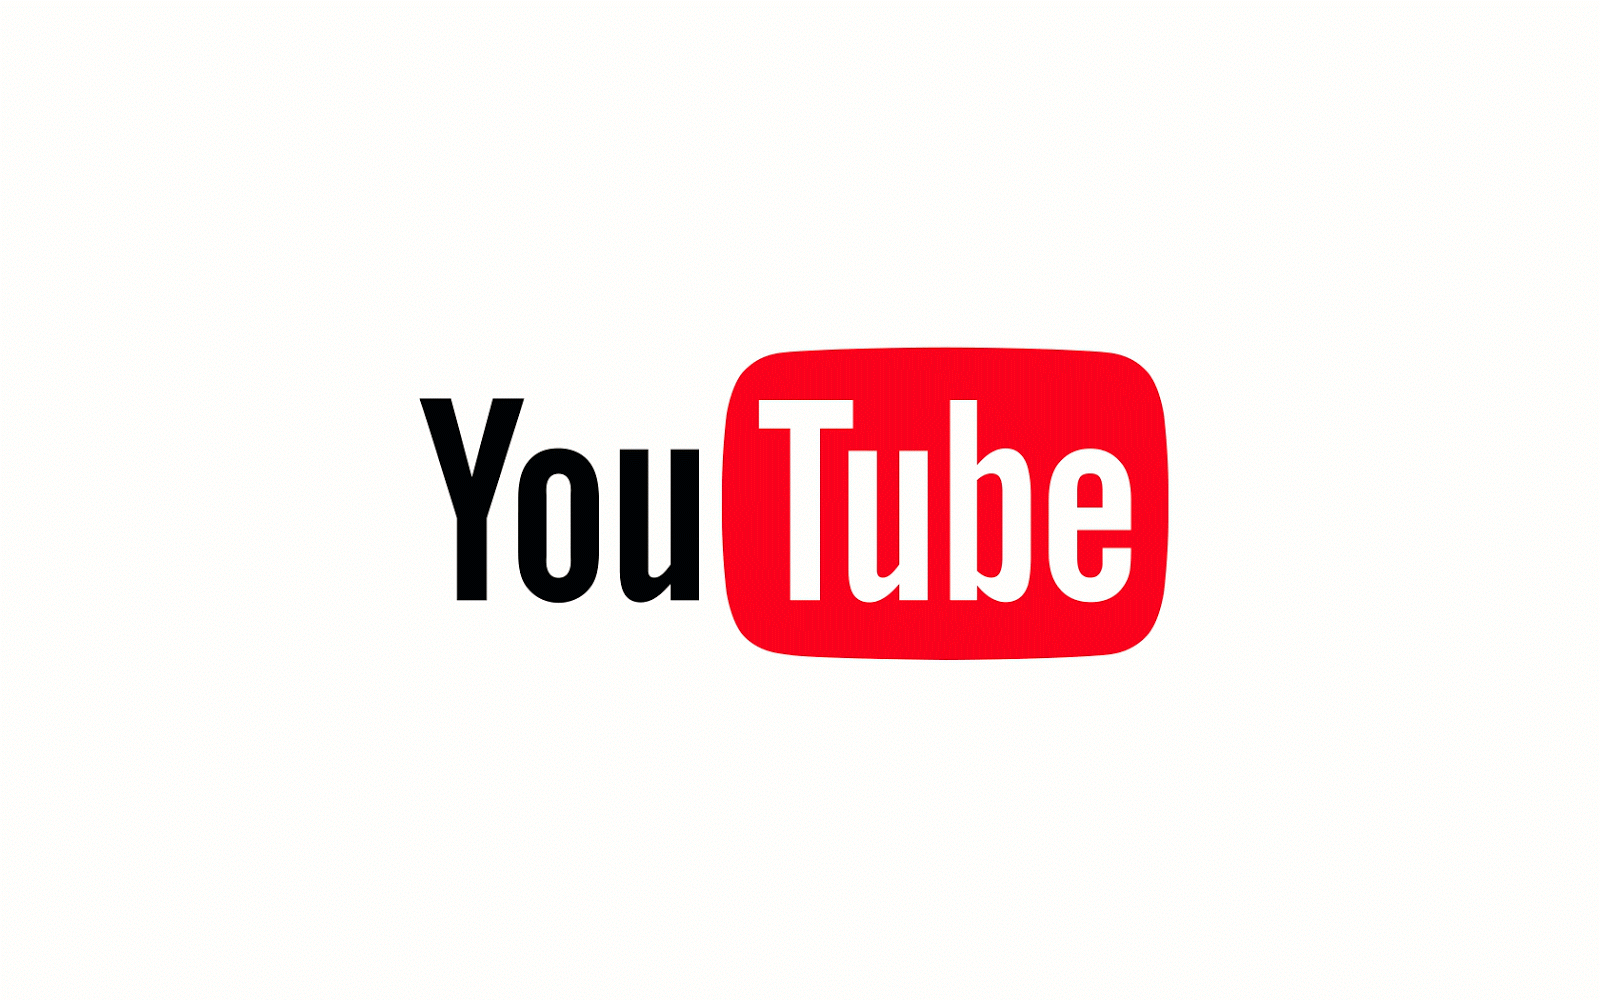 nuevo-logo-youtube